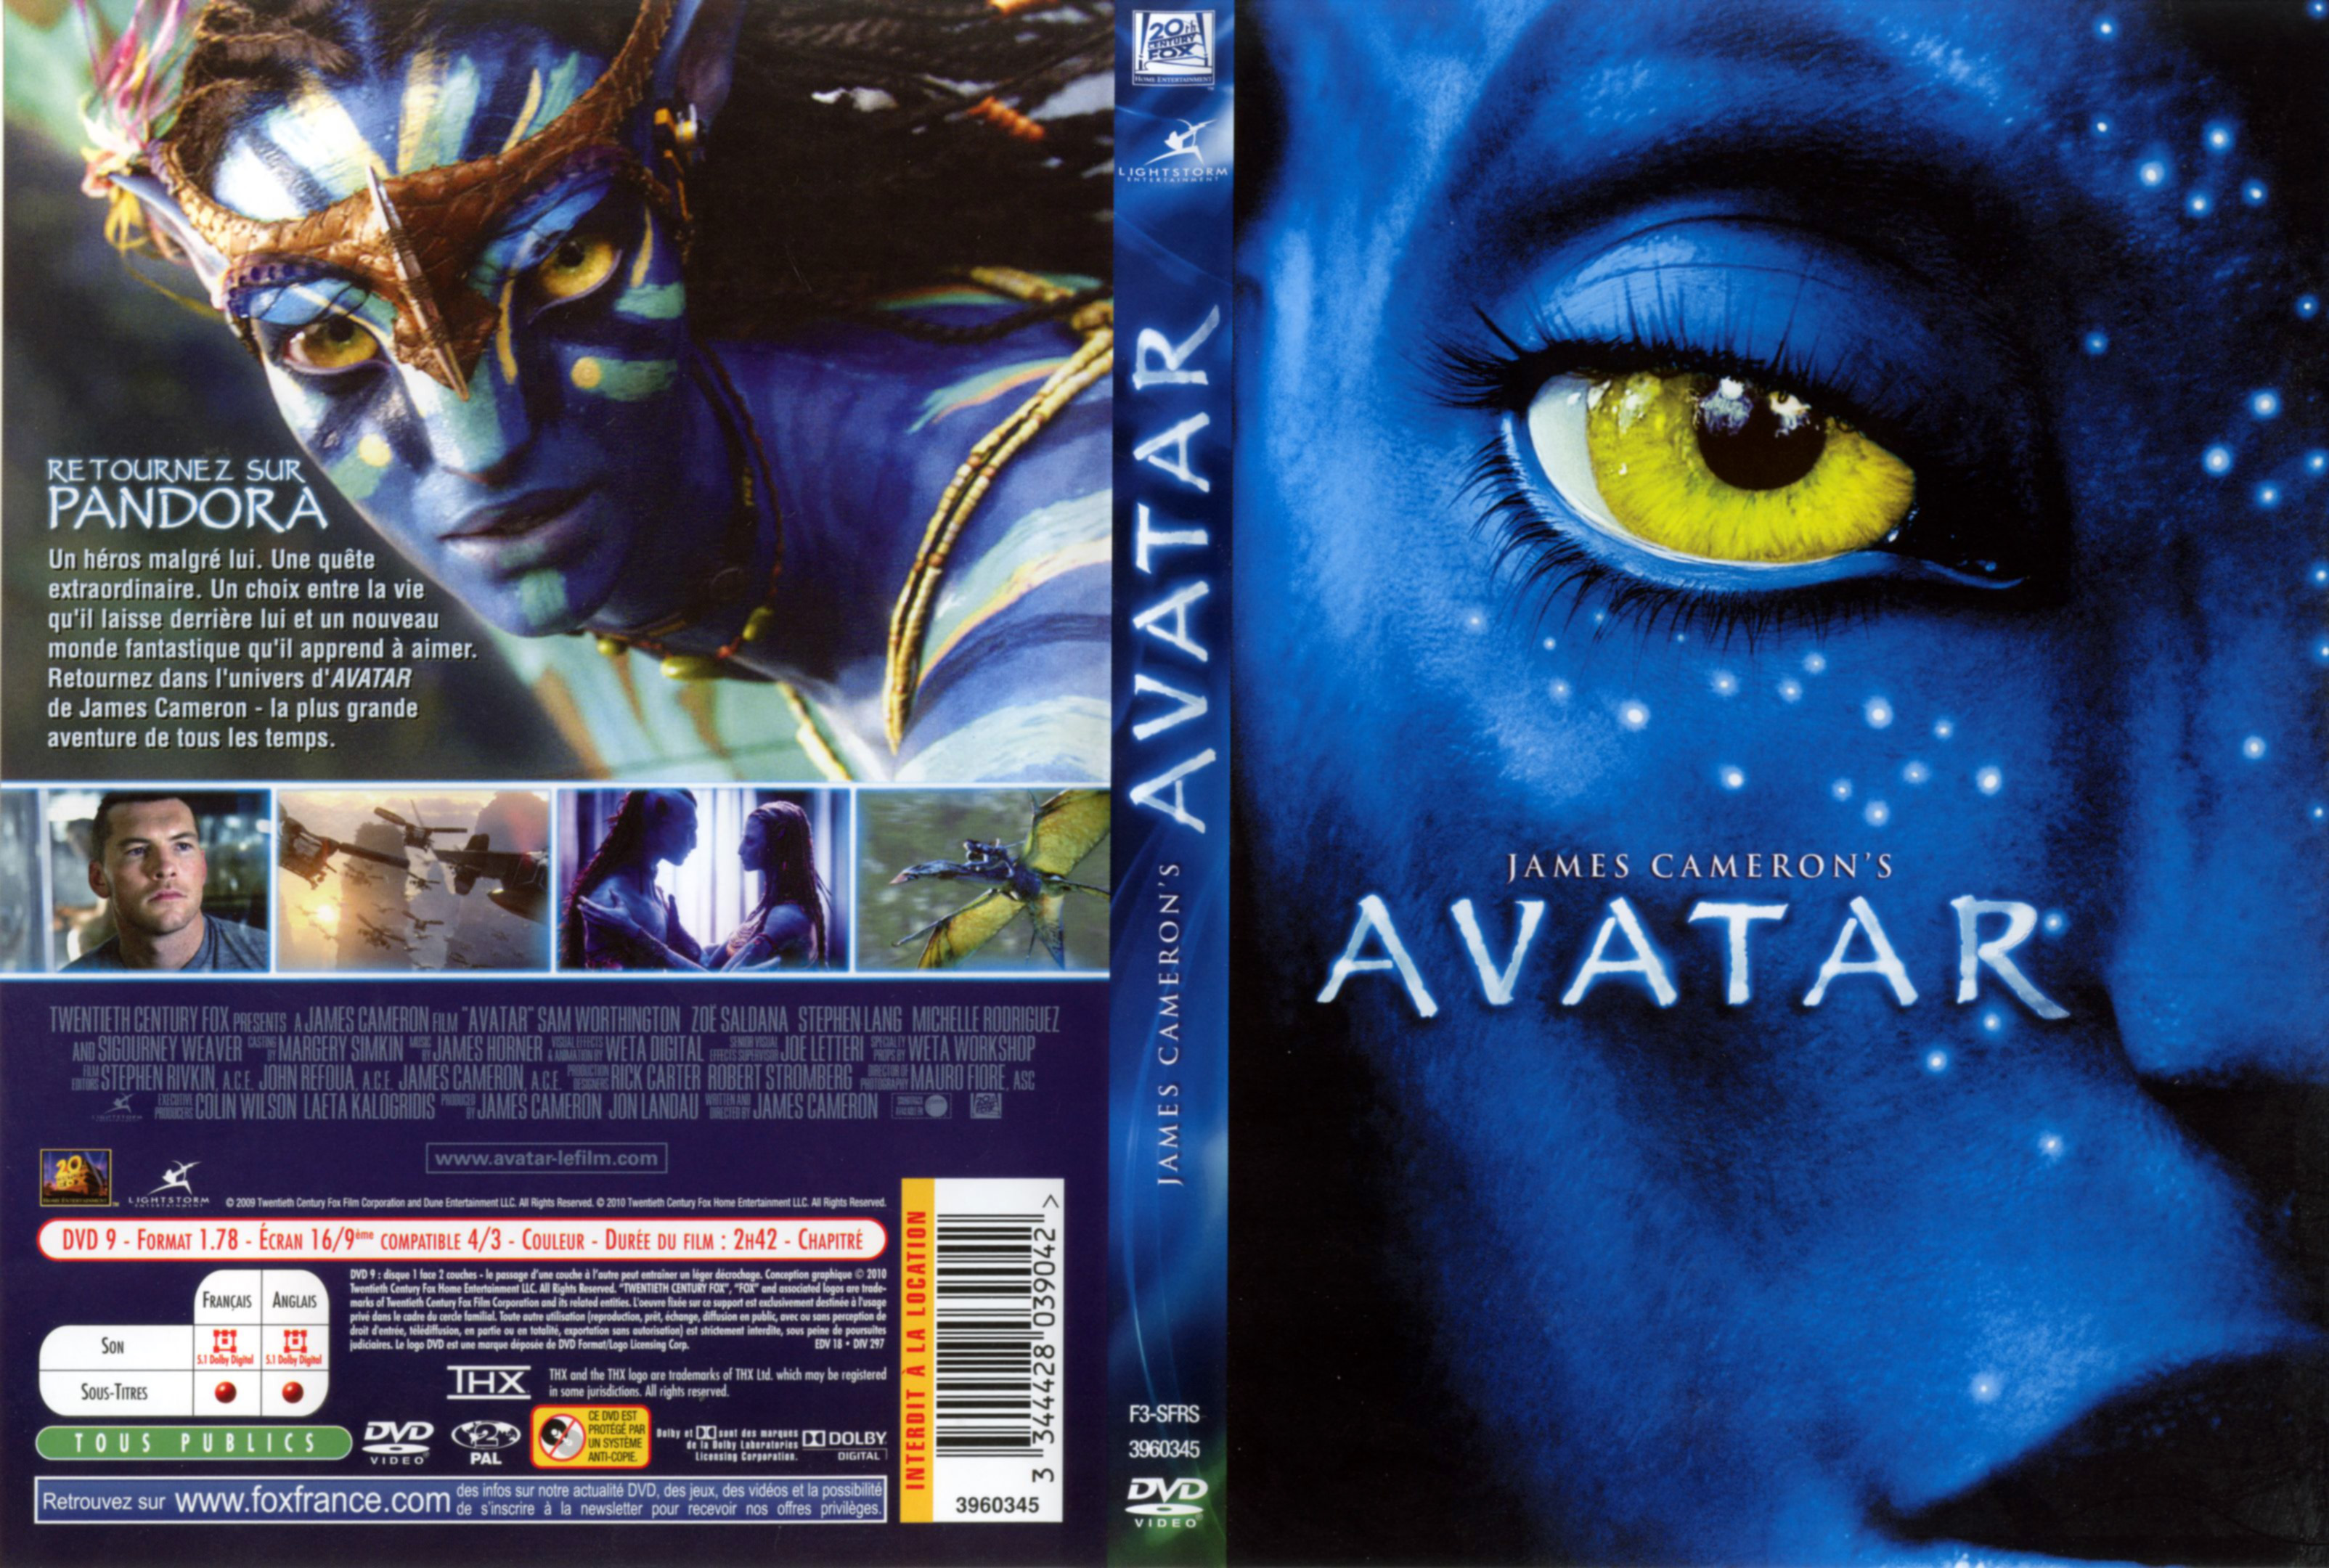 Jaquette DVD Avatar v2